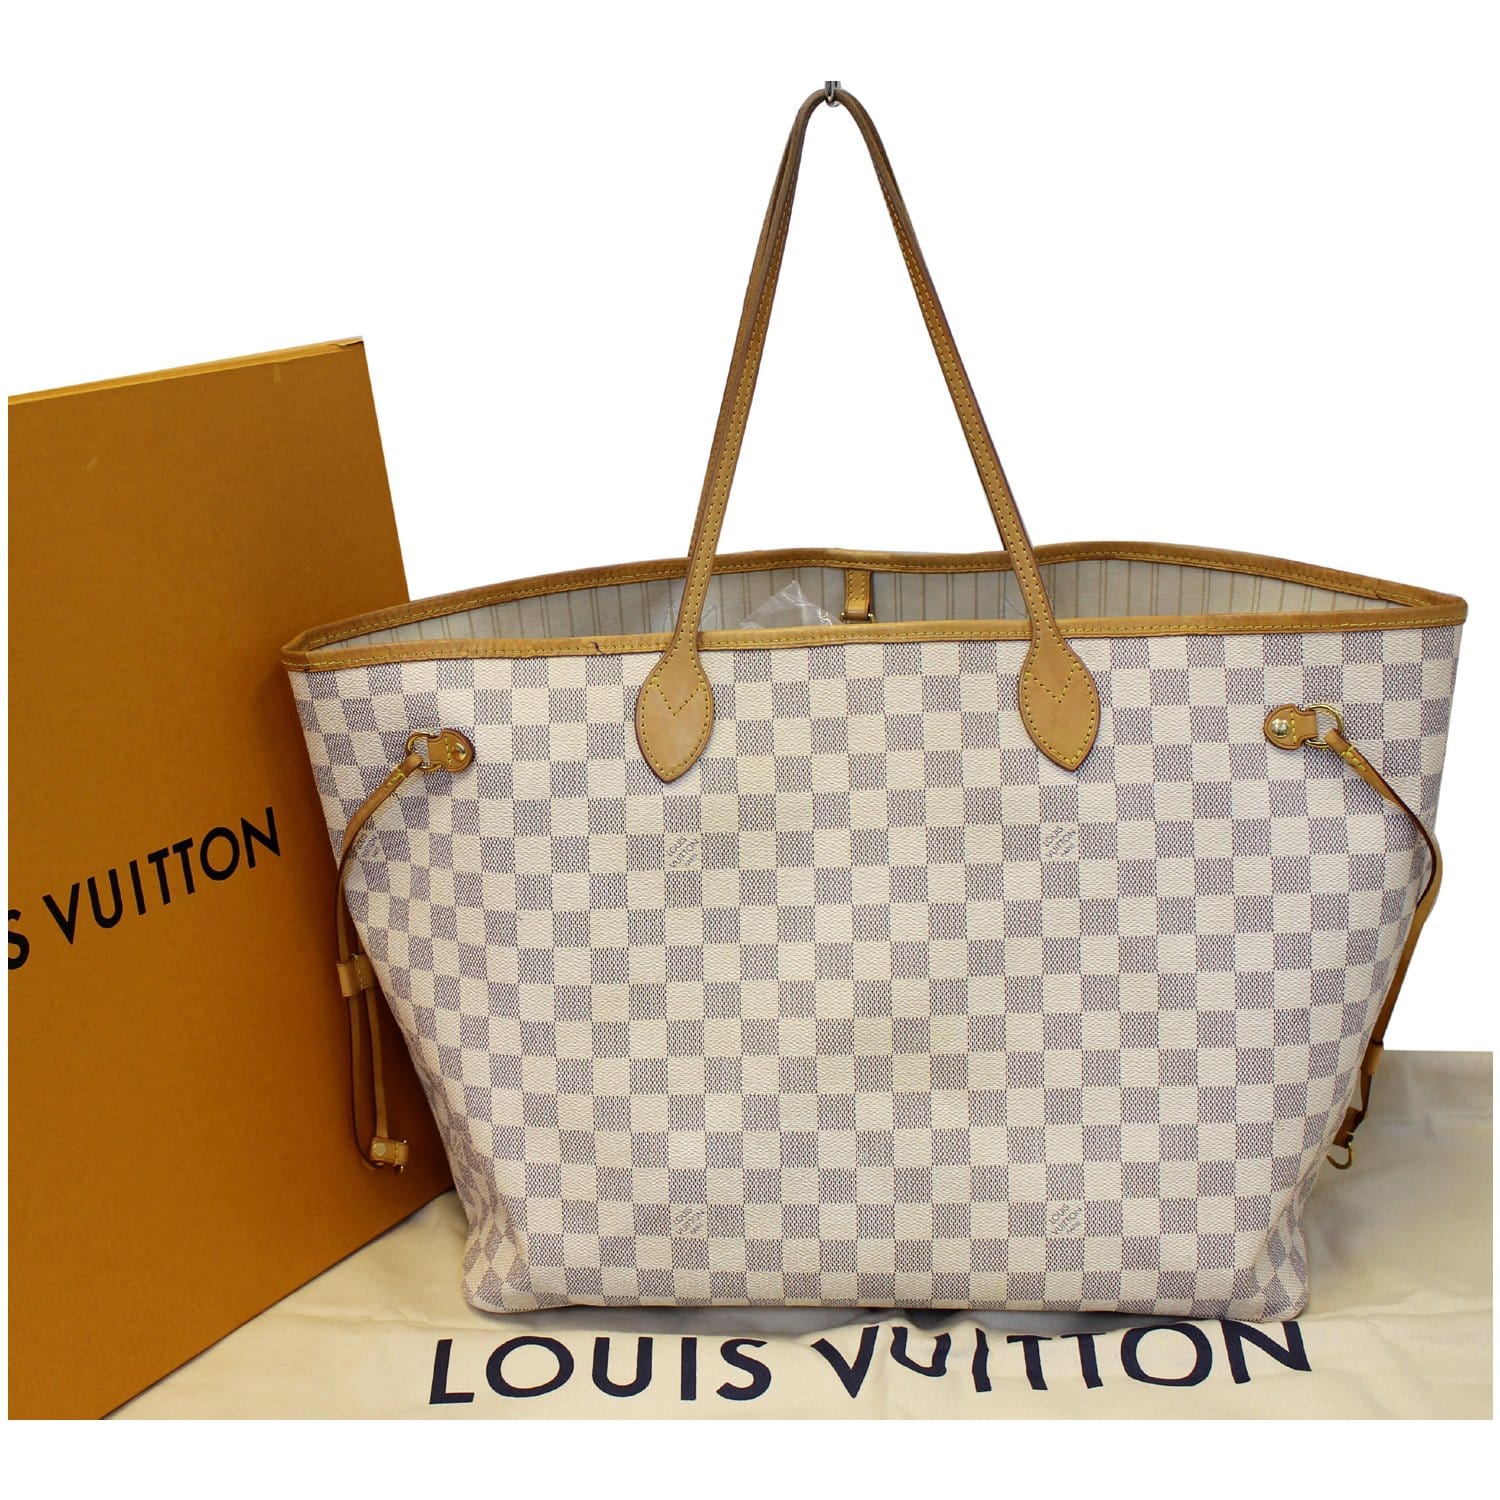 Shop Louis Vuitton Neverfull GM Totebag (Monogram/Damier Ebene/Damier Azur)  by shonacompany